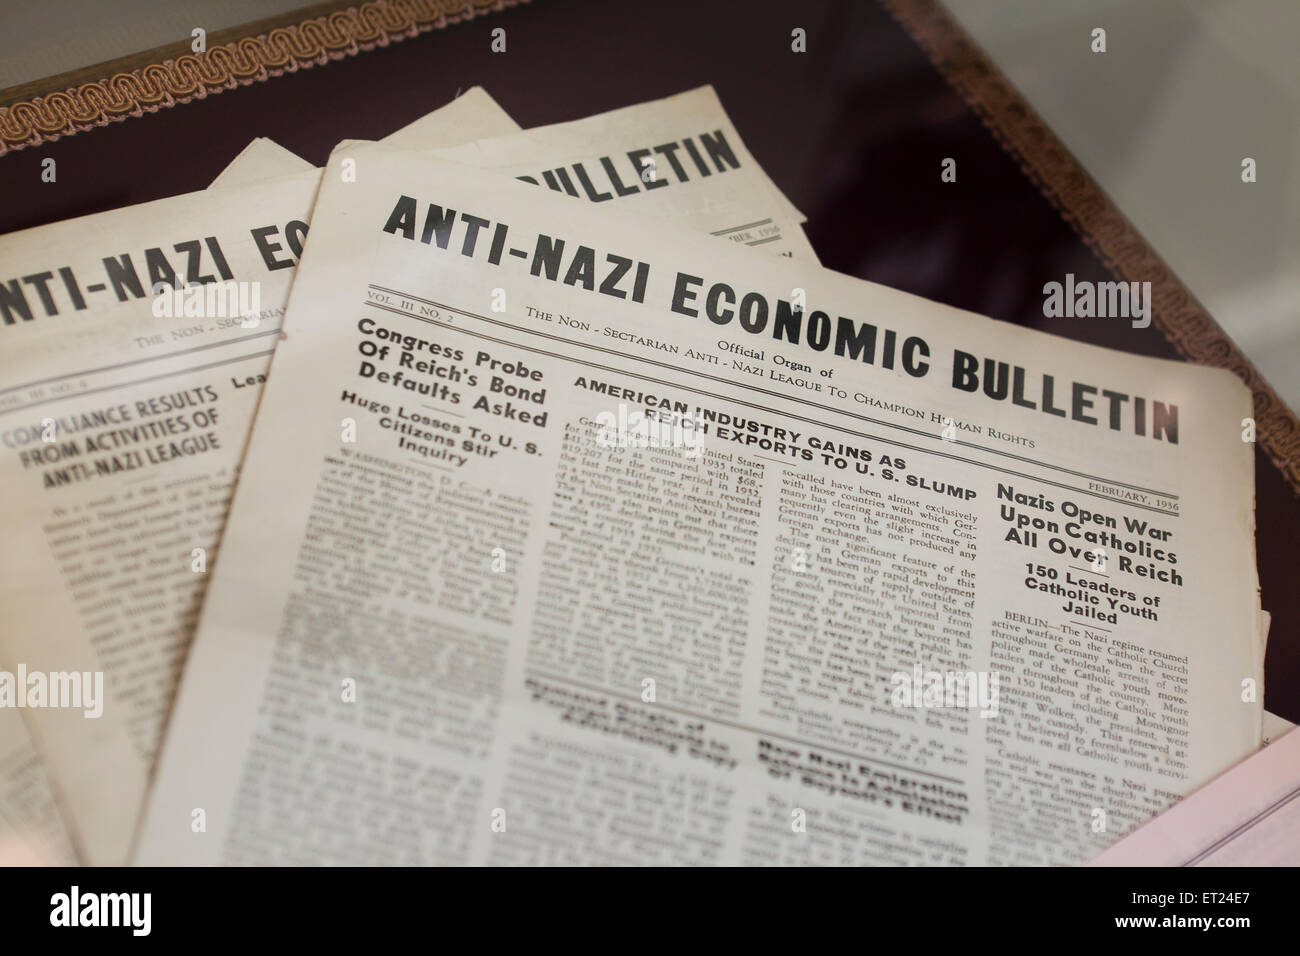 The Anti-NAZI Economic Bulletin published by The Non-Sectarian Anti-Nazi League, February 1936 Stock Photo